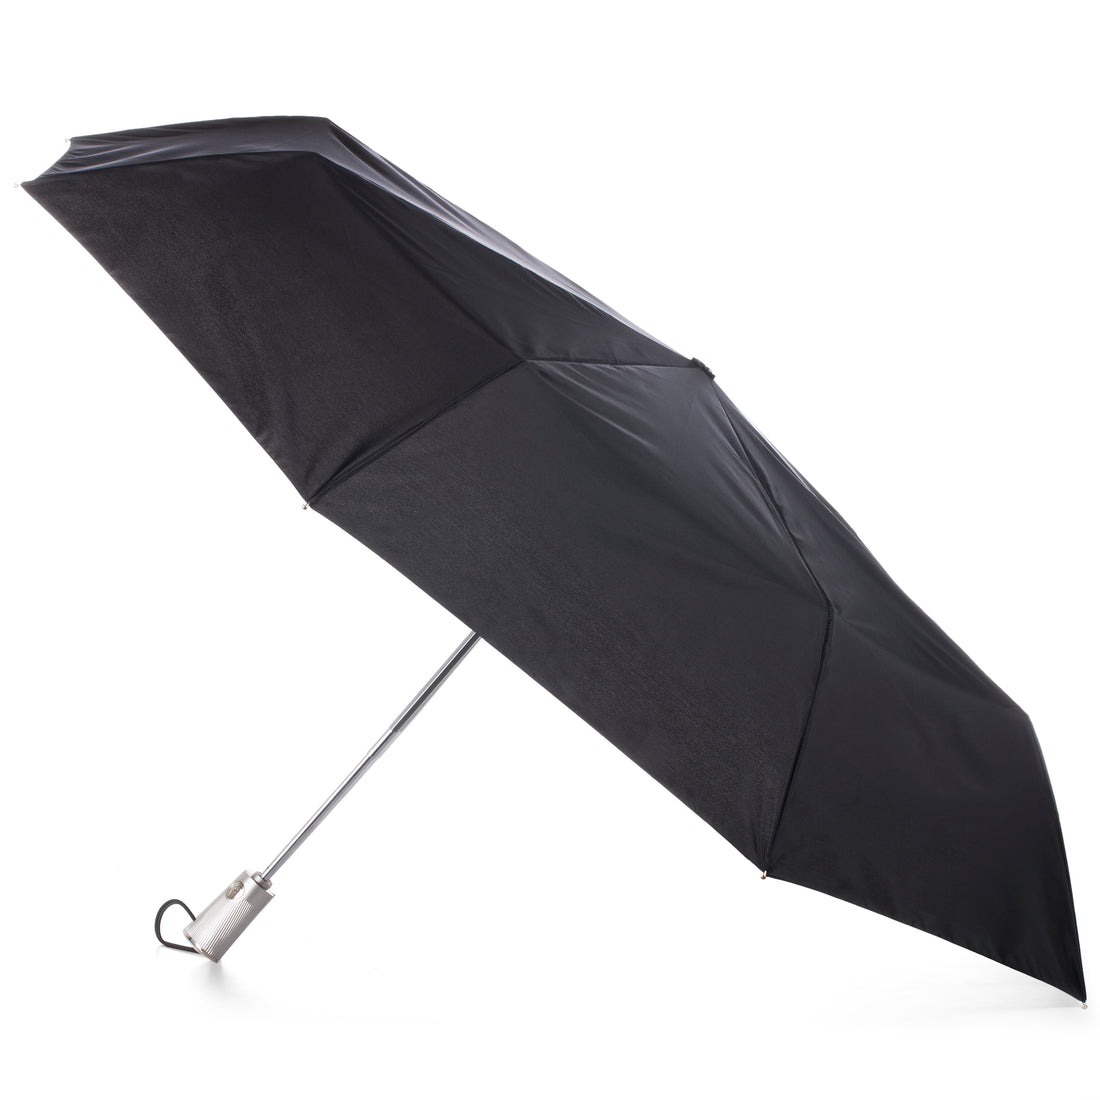 Extra-Large SunGuard® Umbrella with Auto Open/Close Technology